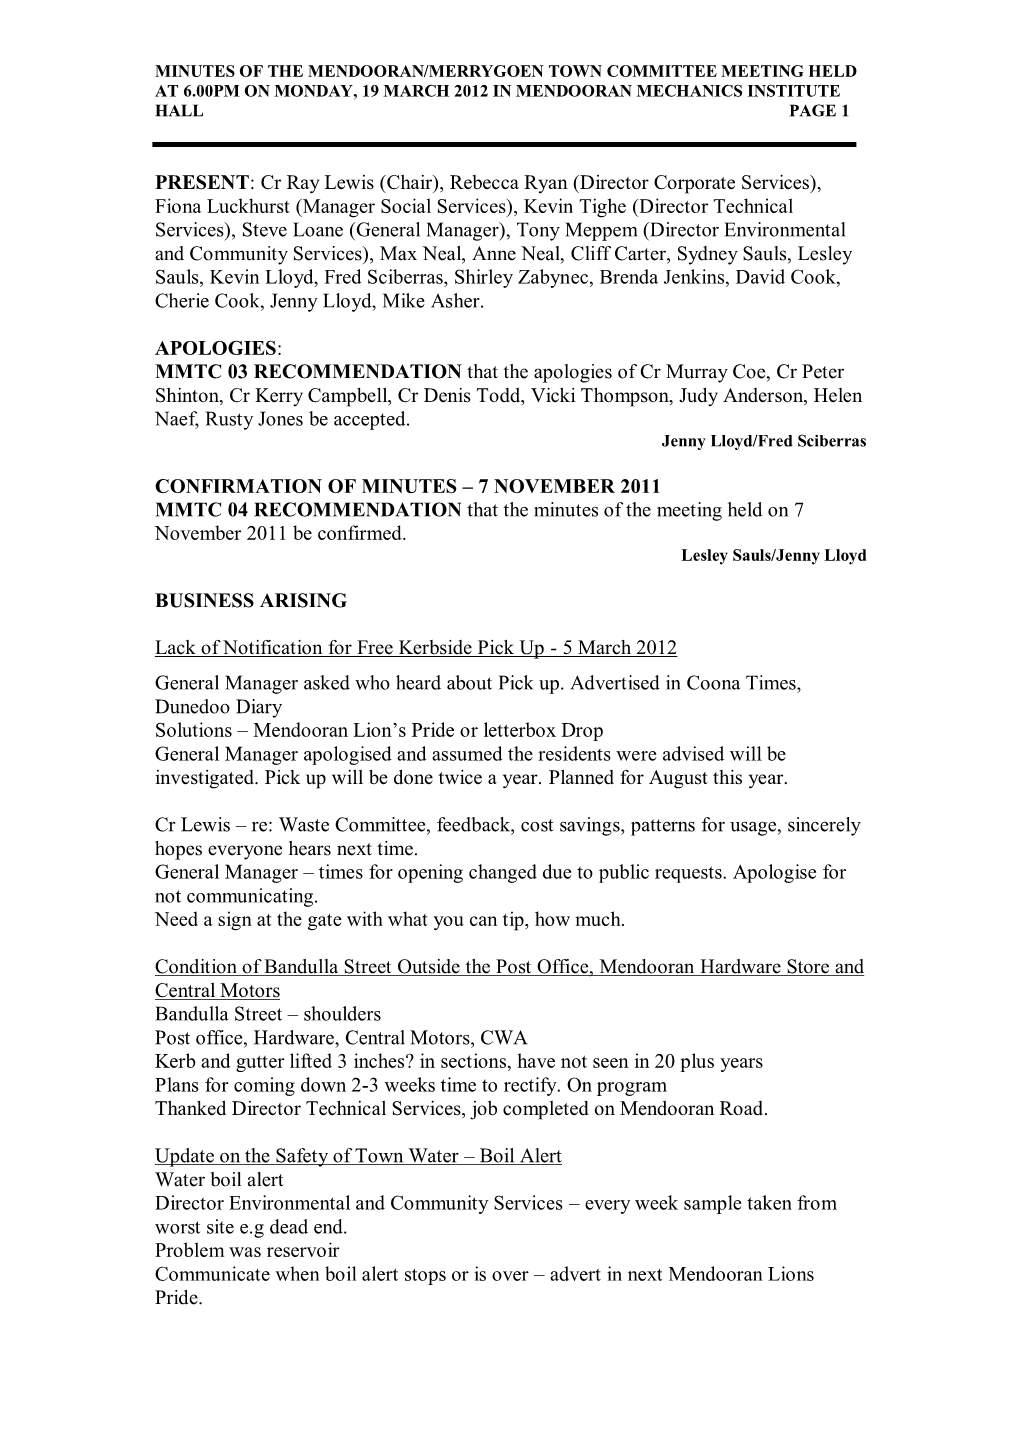 Minutes of the Mendooran/Merrygoen Town Committee Meeting Held at 6.00Pm on Monday, 19 March 2012 in Mendooran Mechanics Institute Hall Page 1